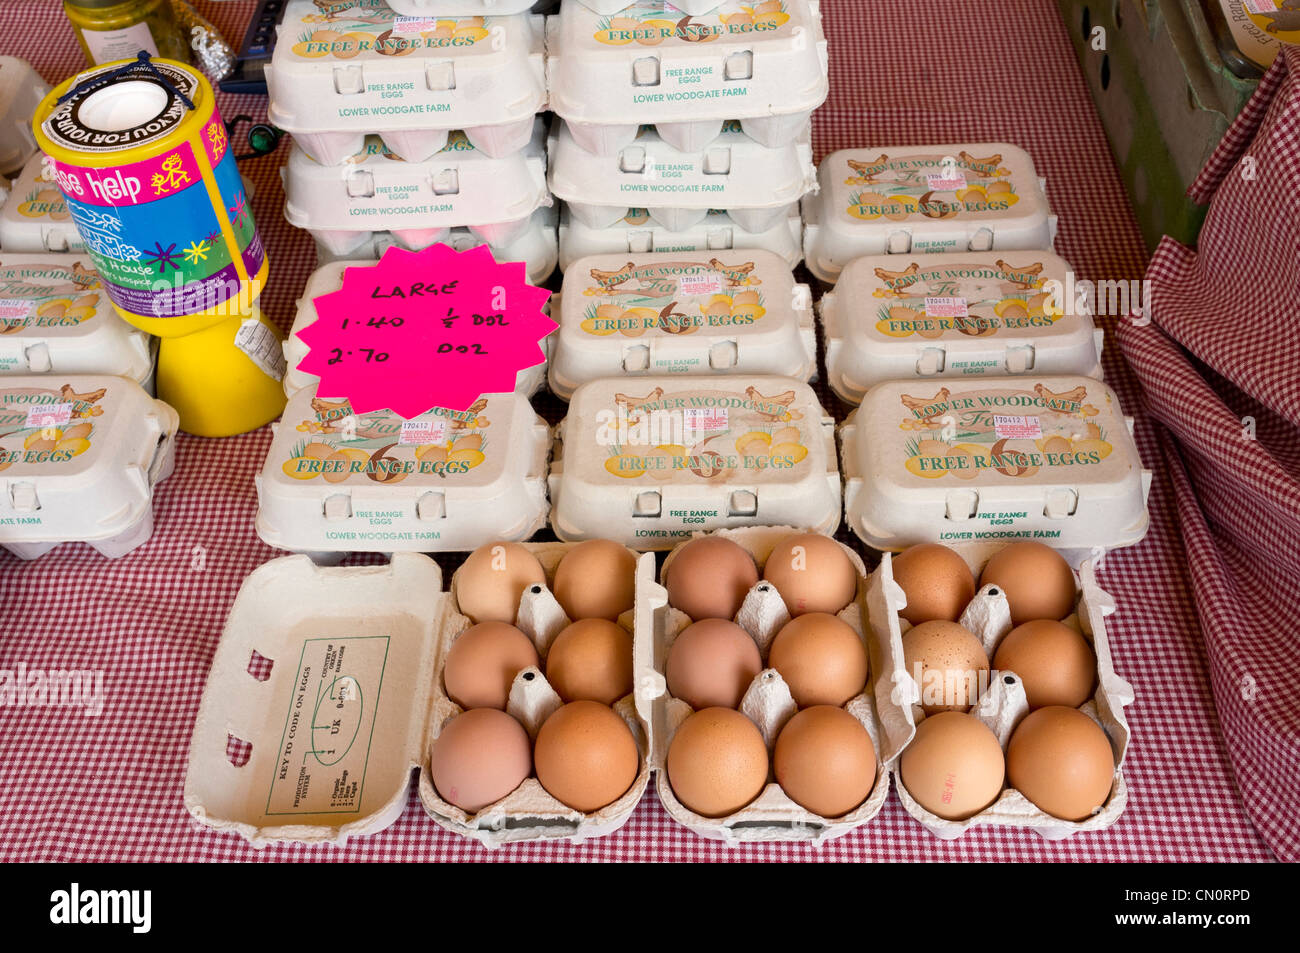 Fresh free range eggs on market stall Stock Photo